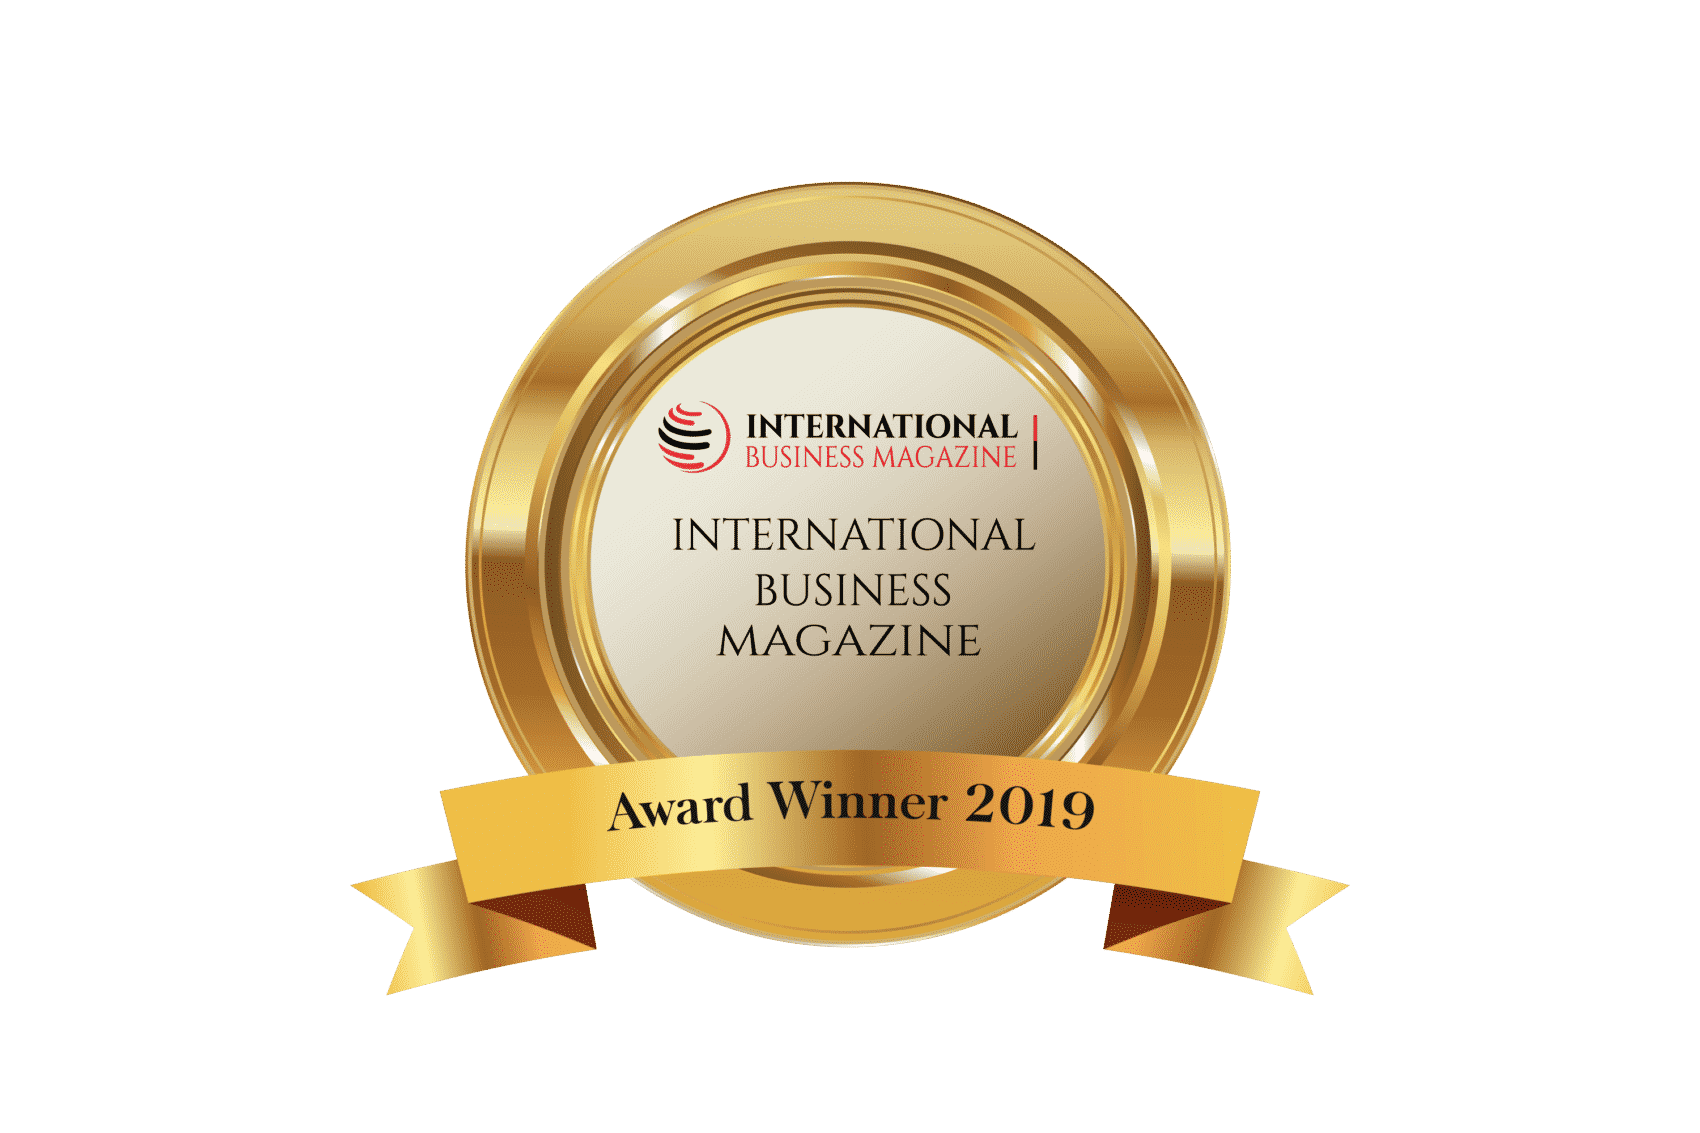 NI Capital Wins the International Business Magazine Award